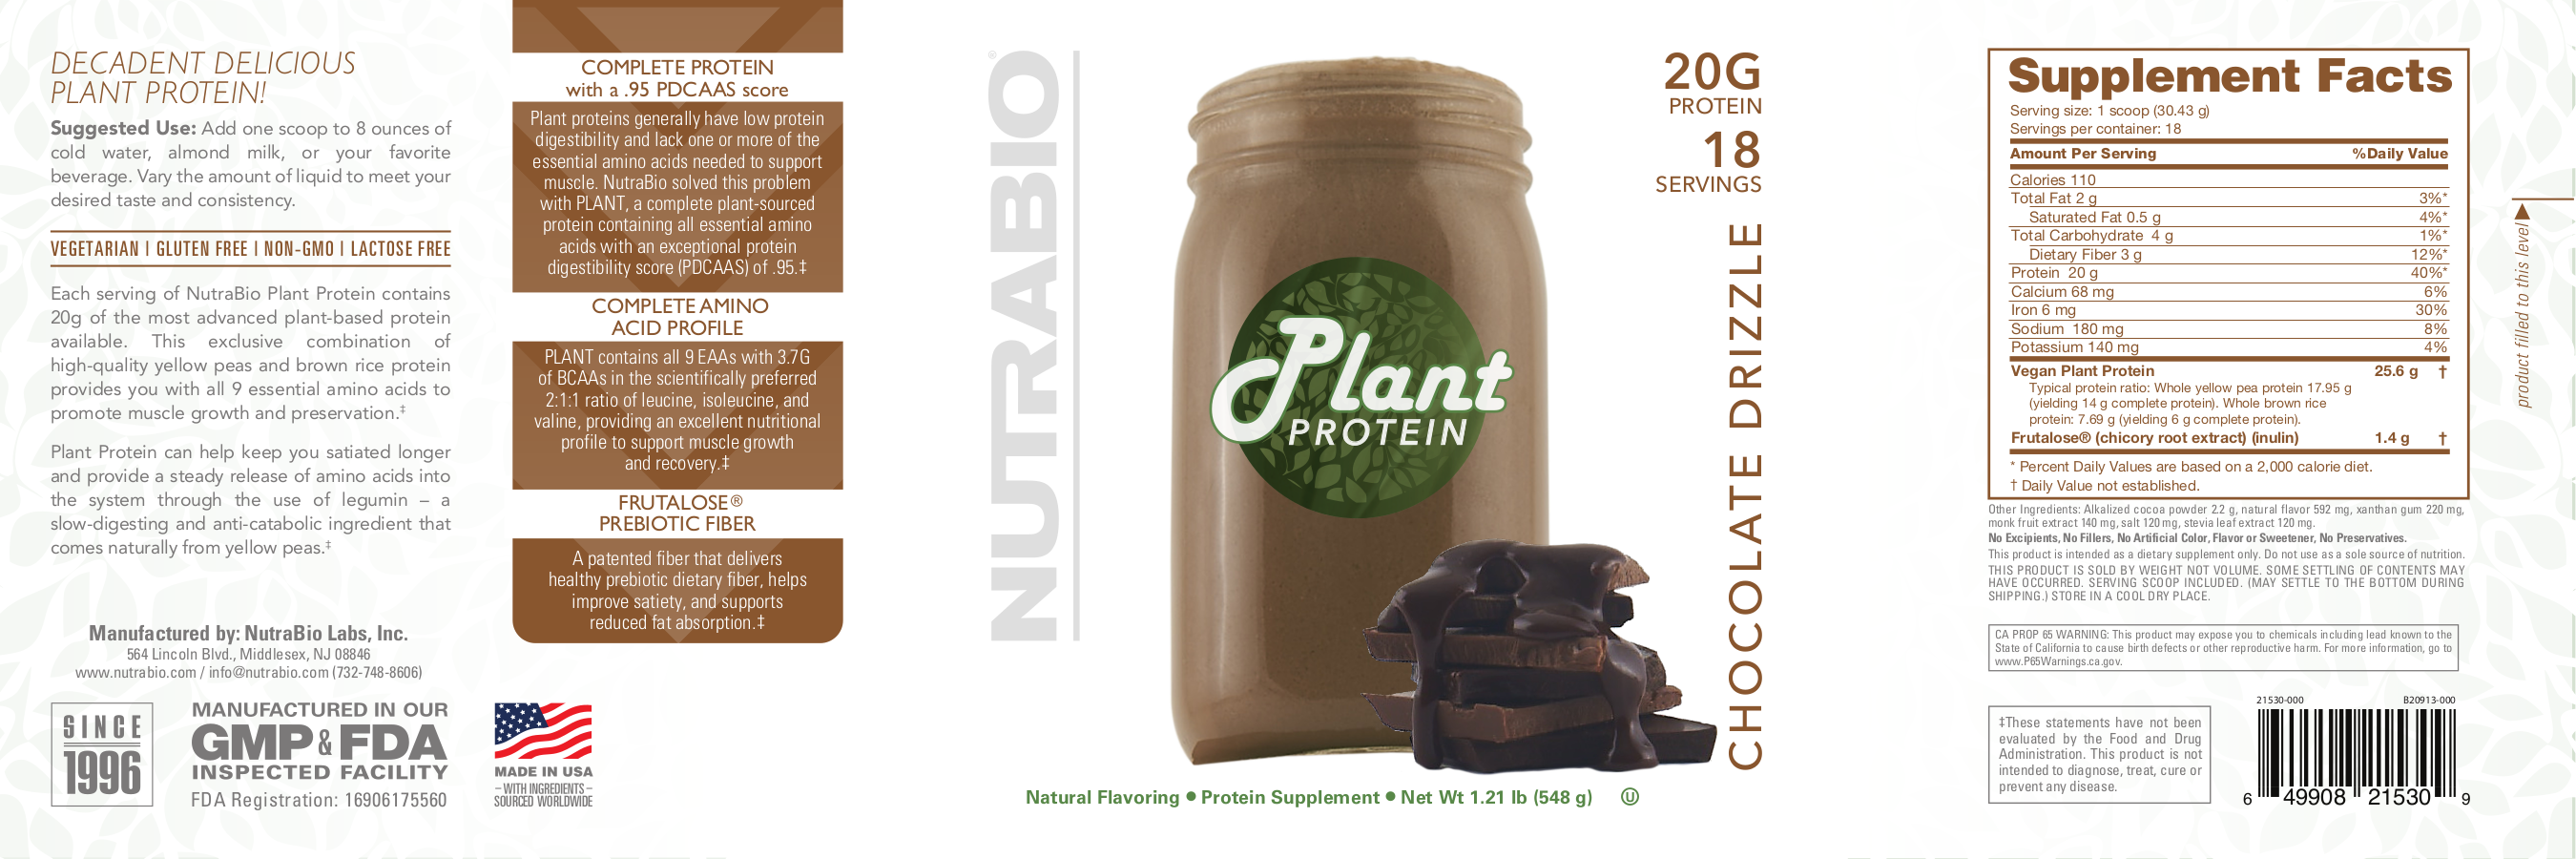 NutraBio Plant Protein Chocolate Drizzle Label